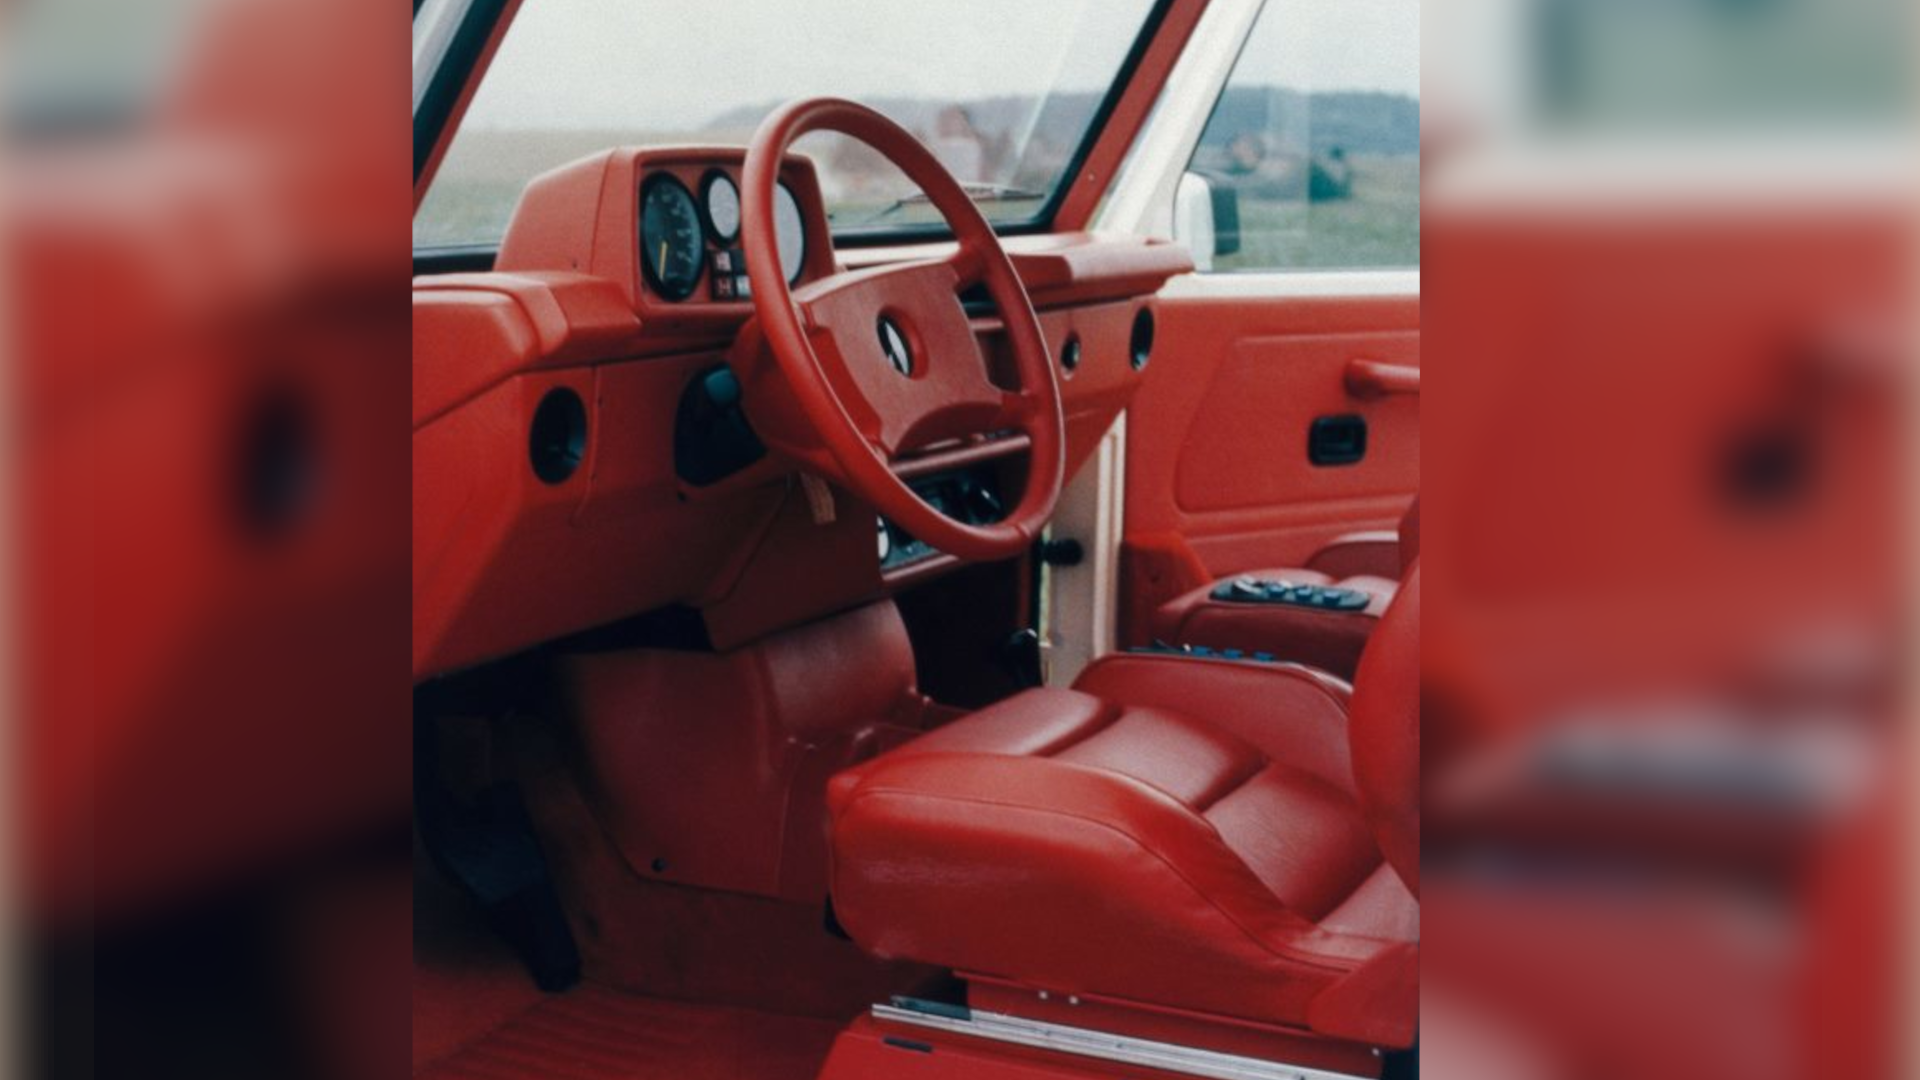 1979 Mercedes G-Class AMG 5.6 interior